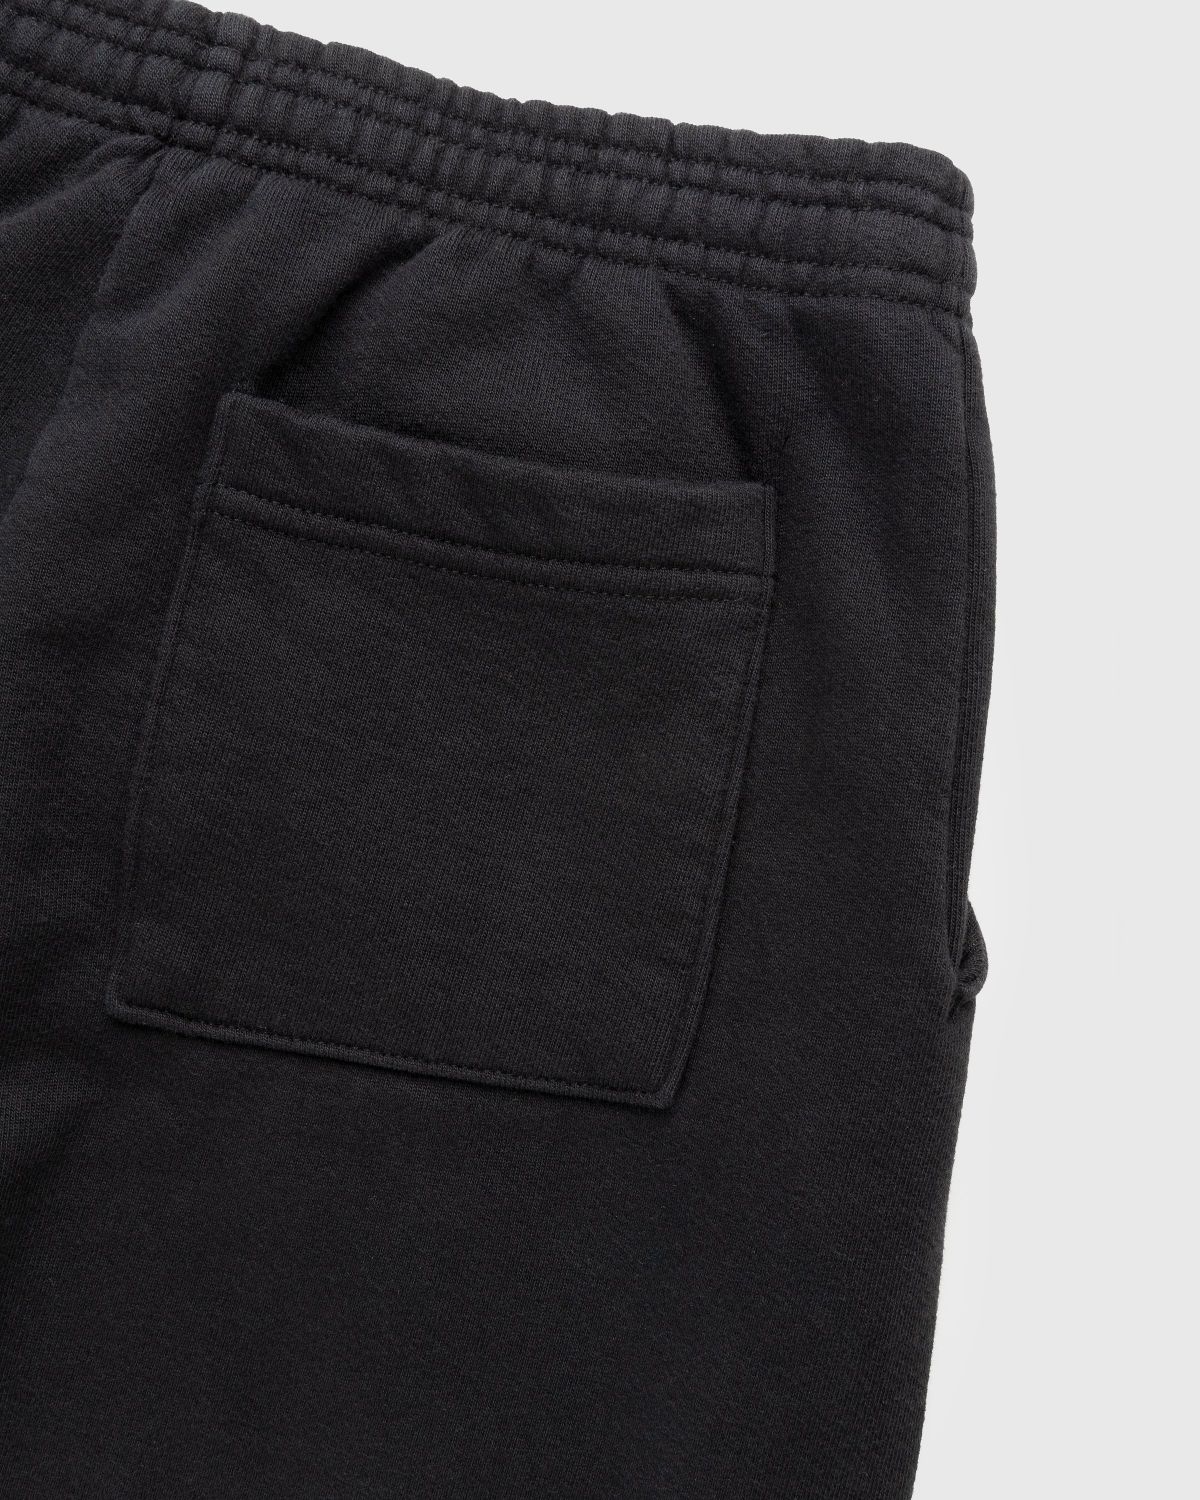 Bstroy x Highsnobiety – Not In Paris 4 Flower Sweatpants Black - Pants - Black - Image 4